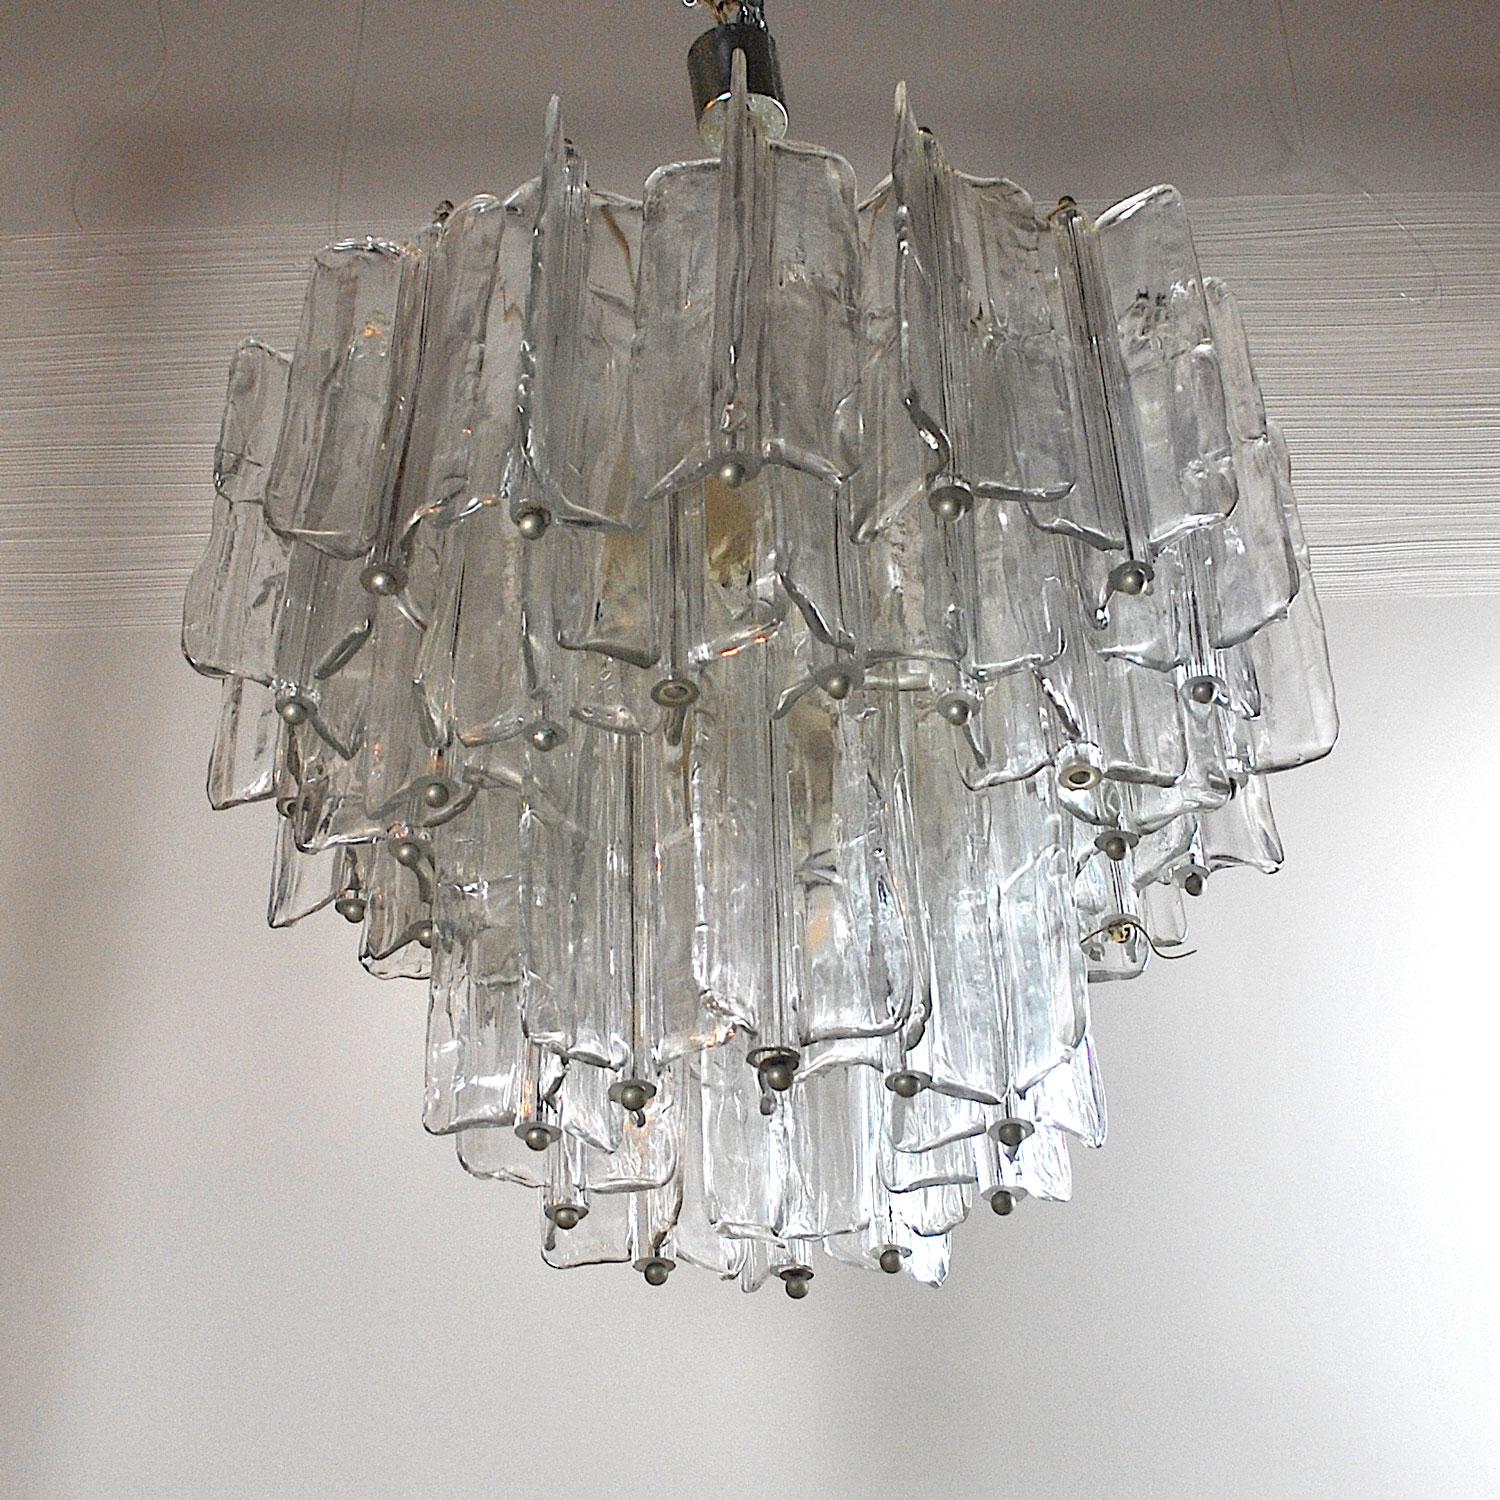 Toni Zuccheri for Venini Italian midcentury chandelier in Murano glass from the 1950s.